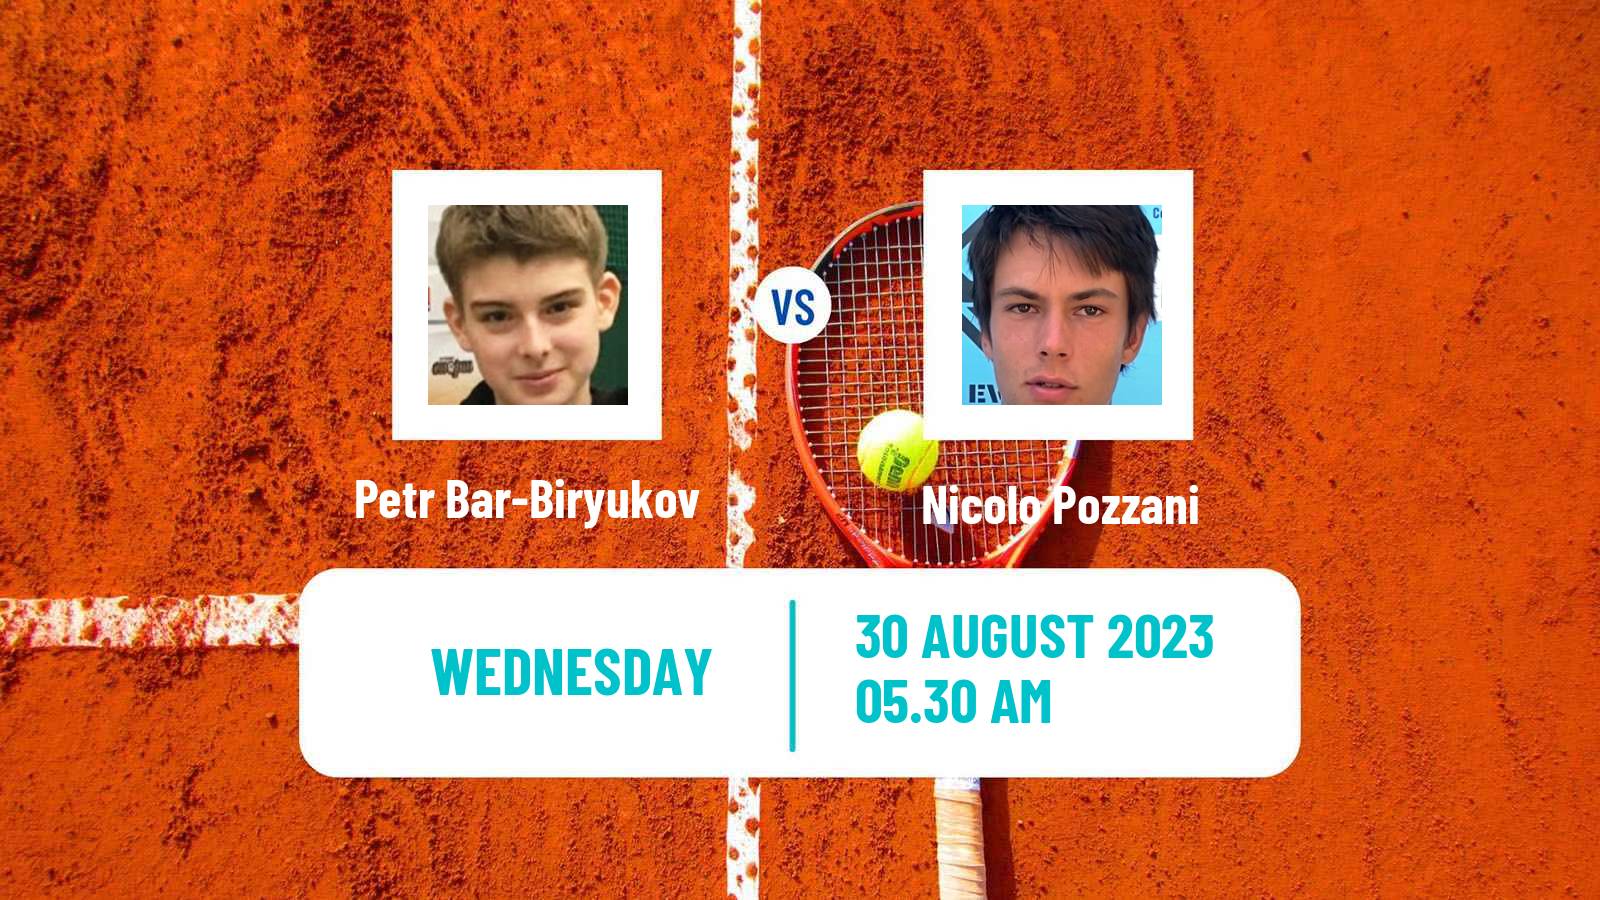 Tennis ITF M15 Kursumlijska Banja 7 Men Petr Bar-Biryukov - Nicolo Pozzani